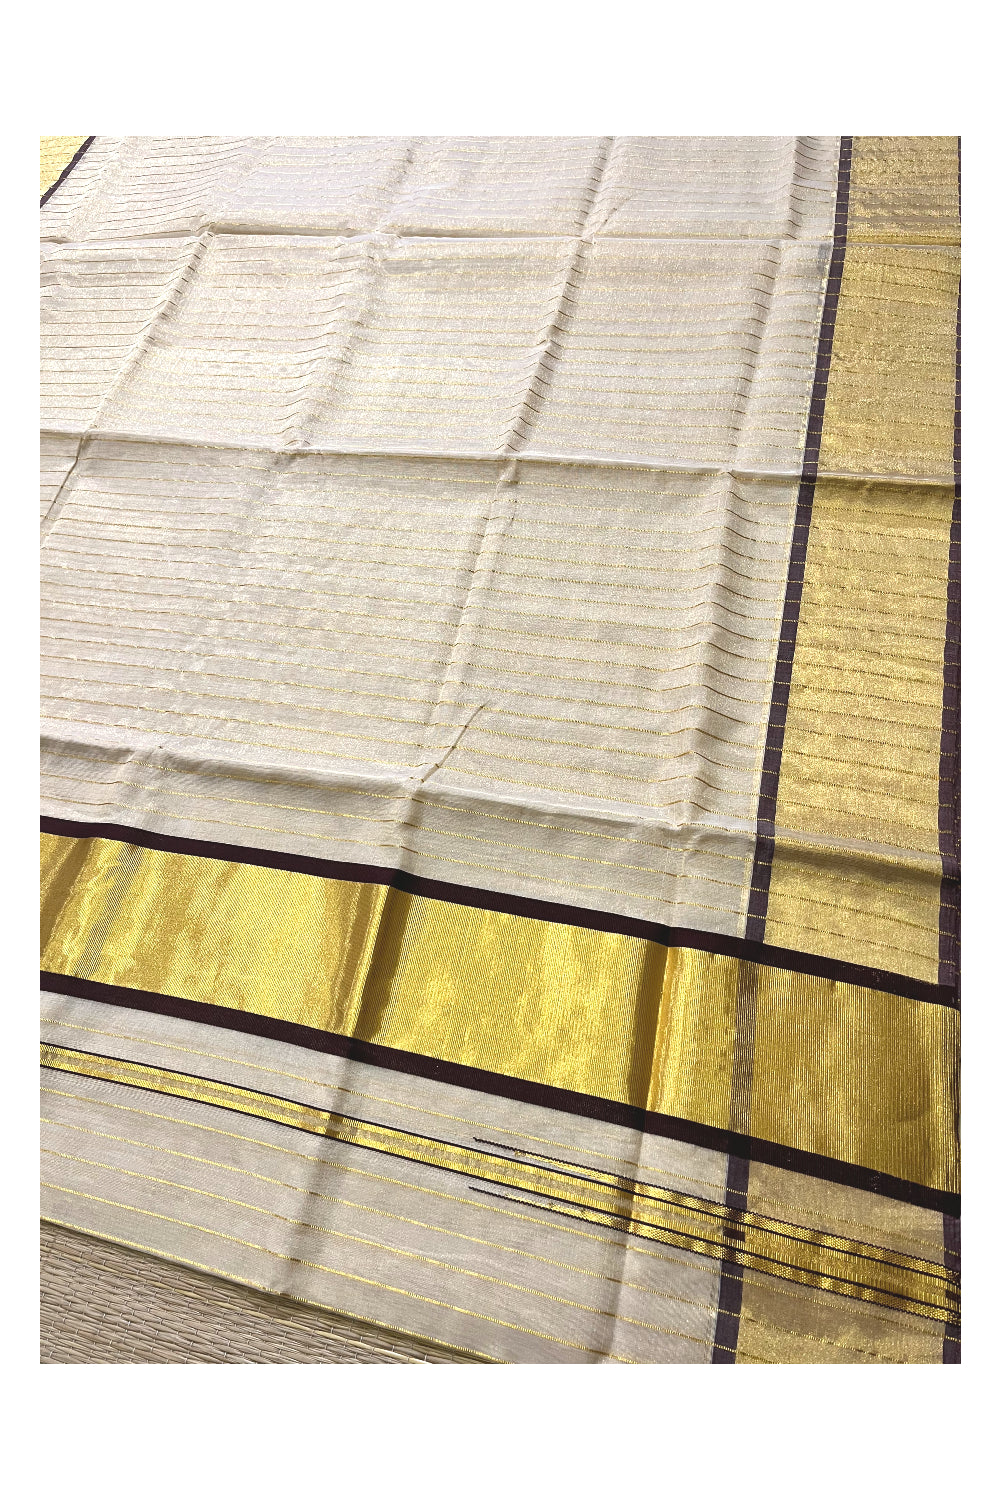 Southloom™ Premium Handloom Tissue Saree with Kasavu Lines Designs Across Body and Dark Brown Border